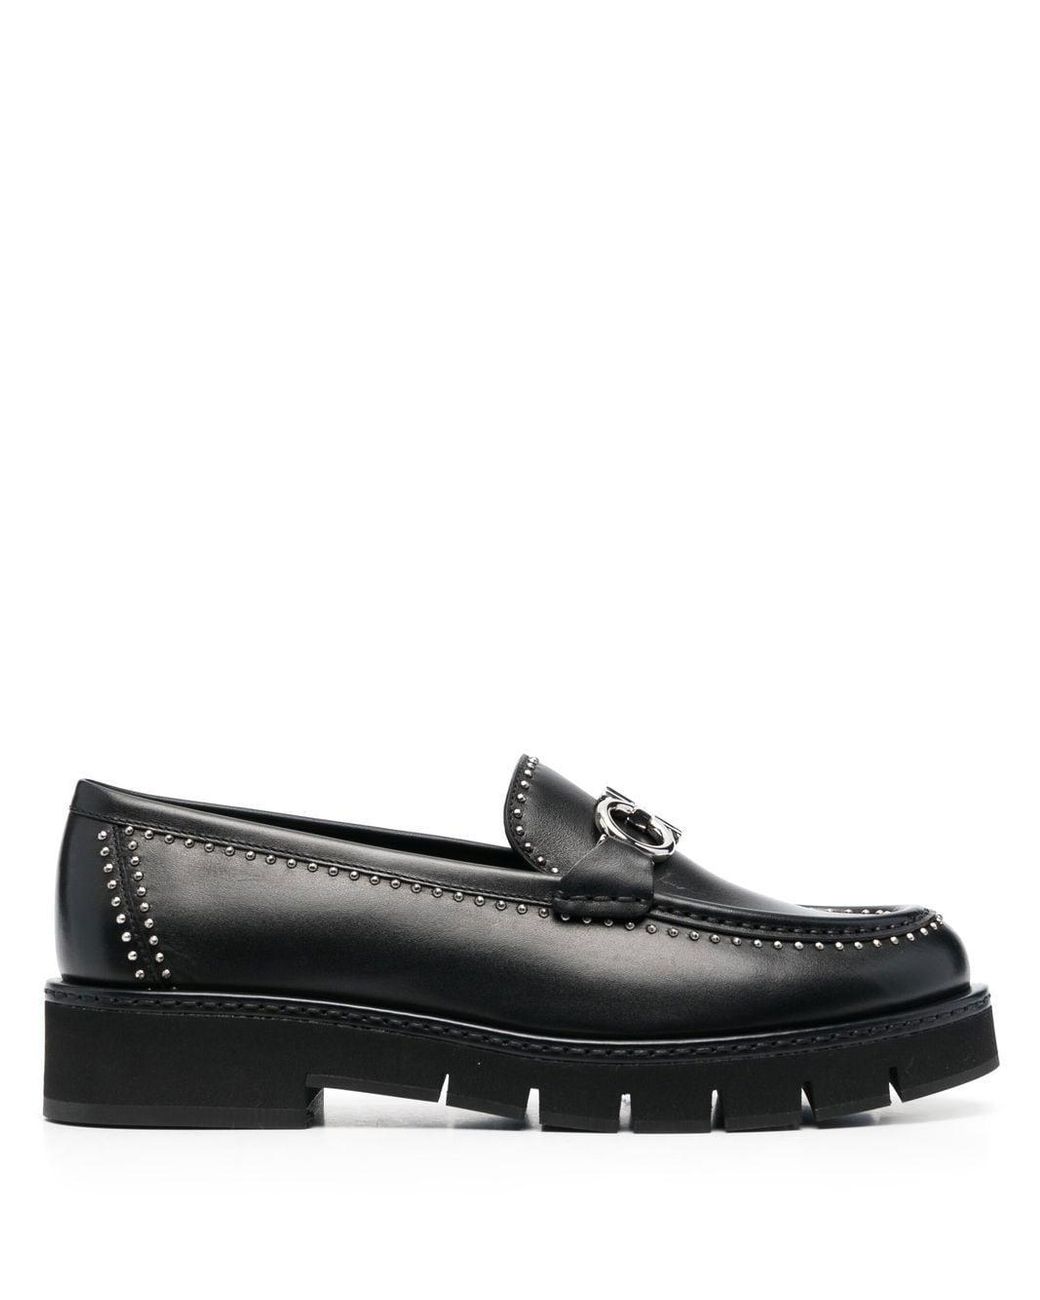 Ferragamo Rolo Lug Studded Leather Loafers in Black | Lyst